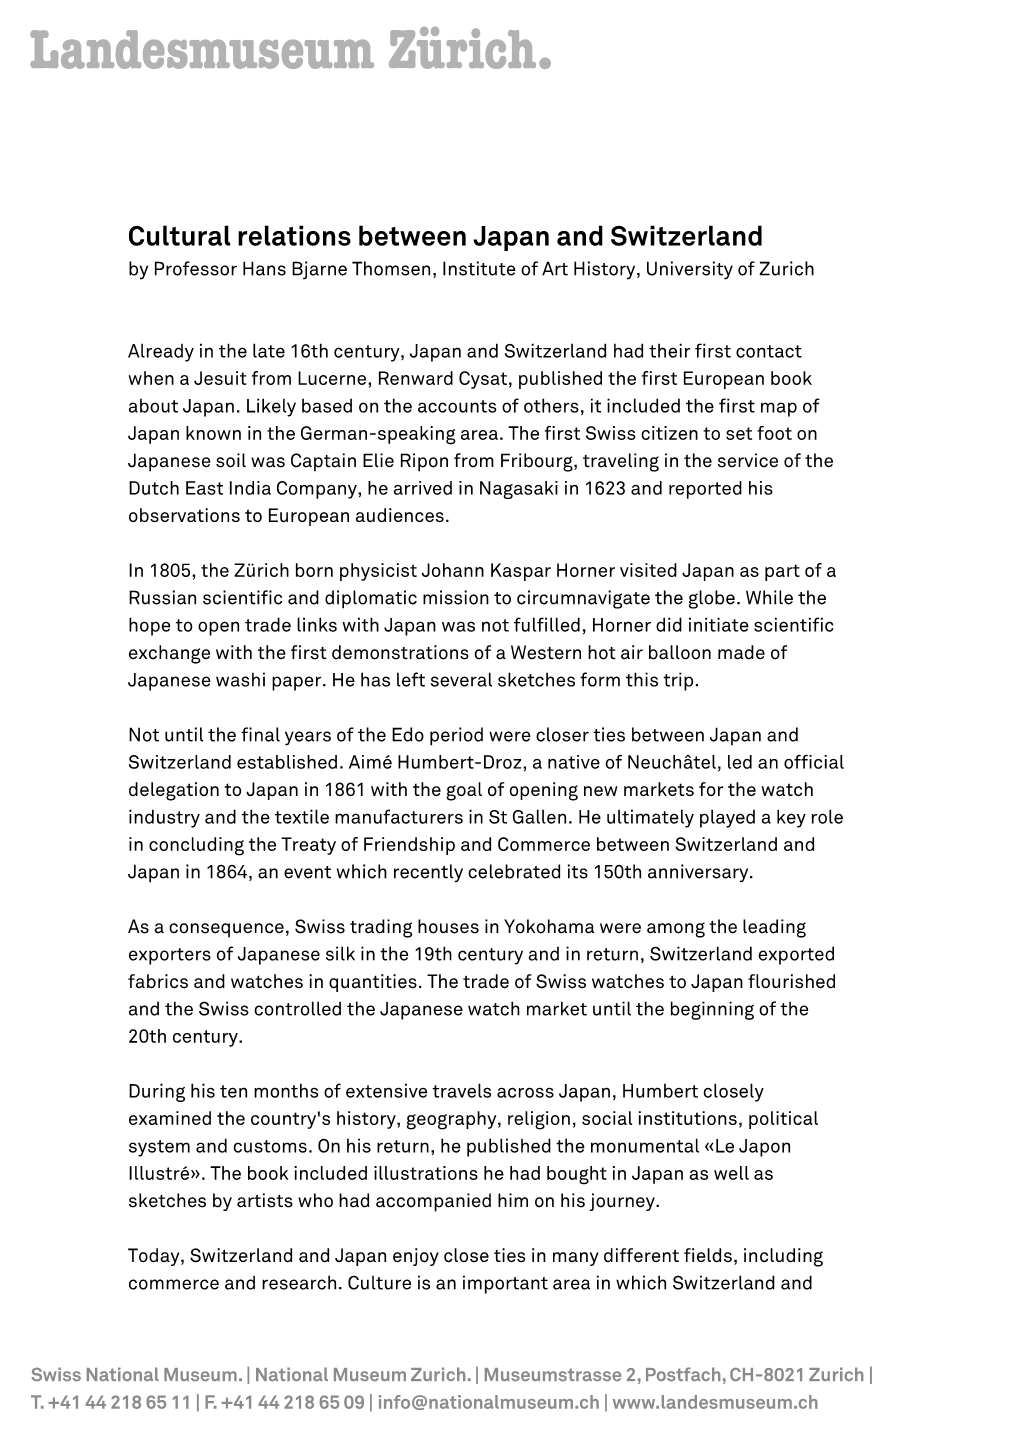 Cultural Relations Between Japan and Switzerland by Professor Hans Bjarne Thomsen, Institute of Art History, University of Zurich